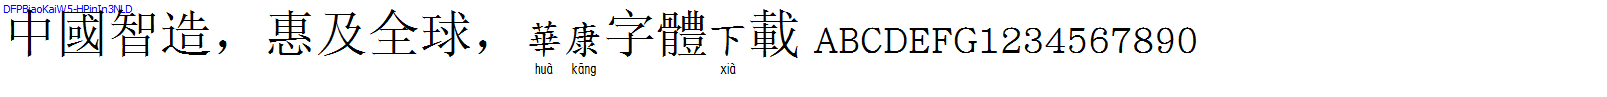 華康字體DFPBiaoKaiW5-HPinIn3NLD.TTF